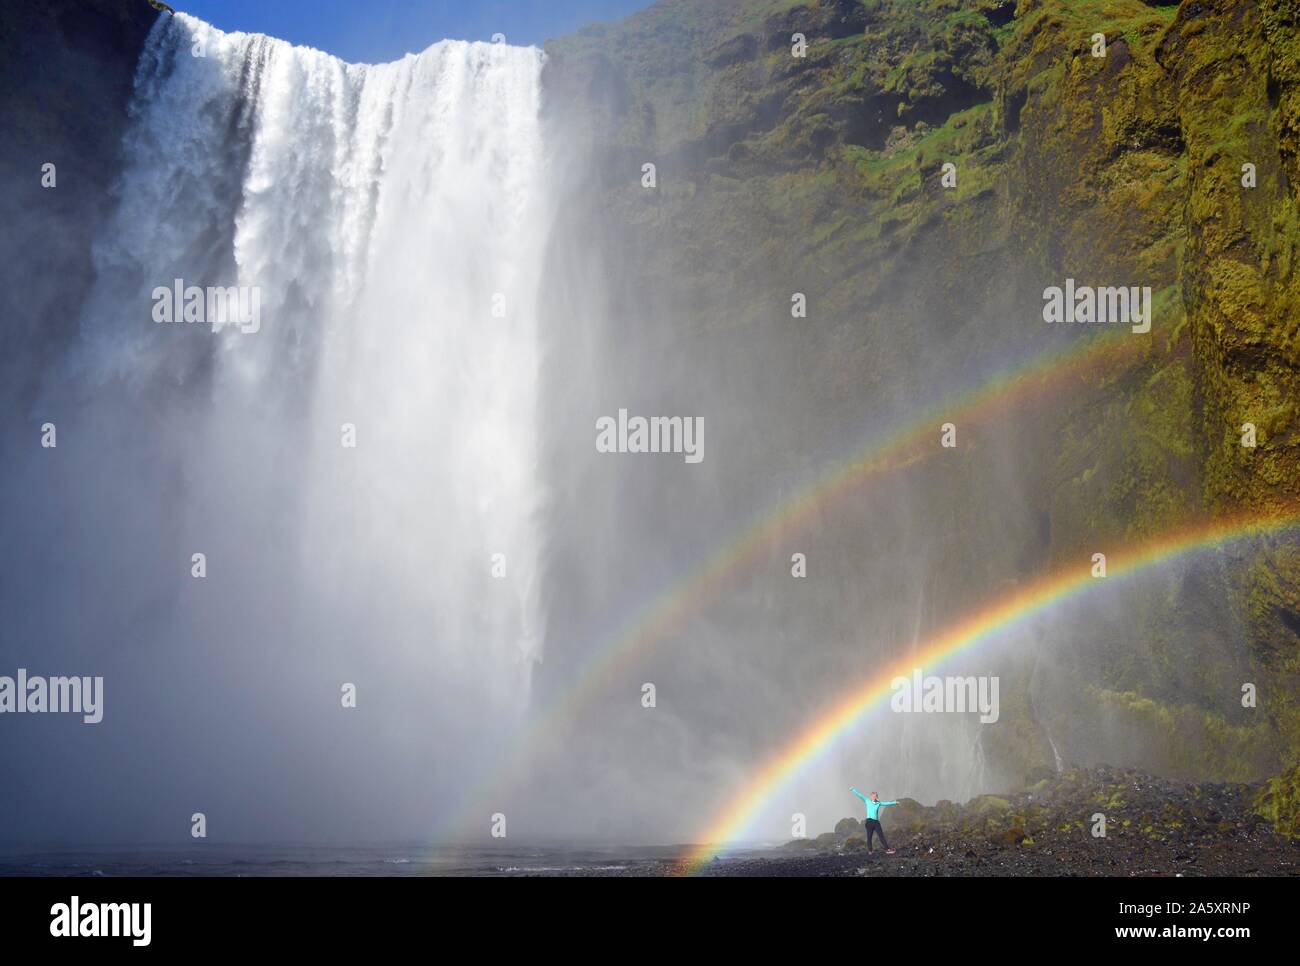 L'homme se tient sous double arc-en-ciel à la grande cascade Skogafoss, Skogafoss, Skogar, ring road, Sudurland, Sud de l'Islande, Islande Banque D'Images